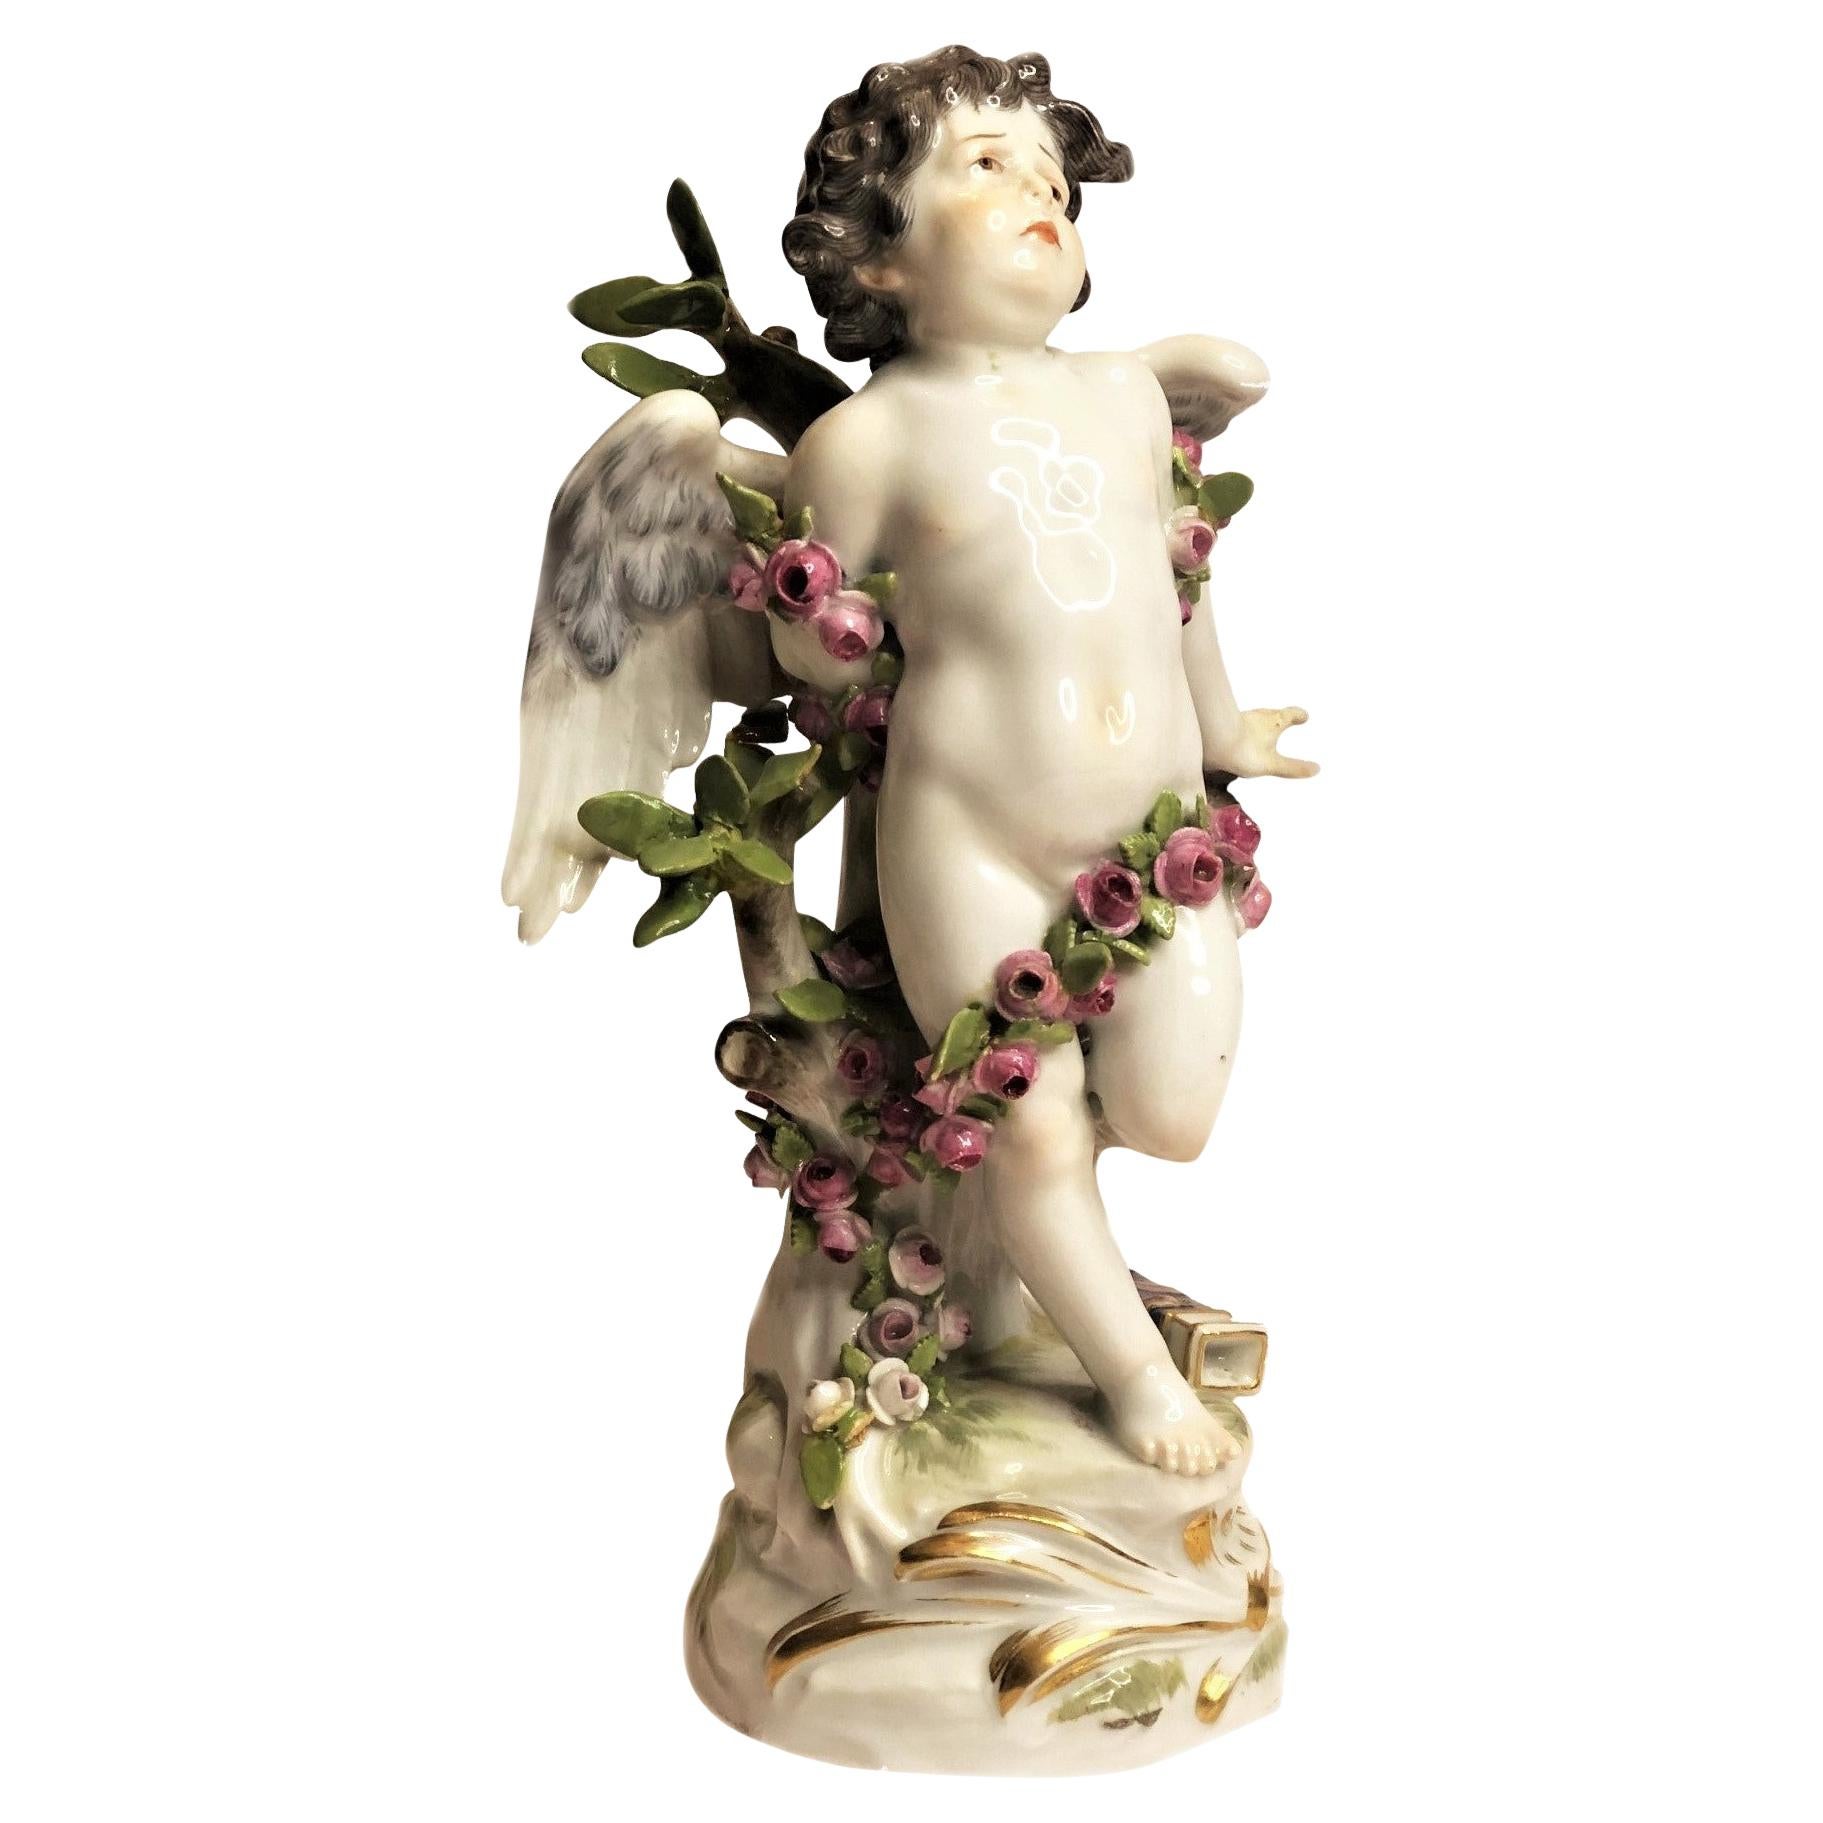 Antique Meissen Porcelain Figurine of Grieving Cupid, ca. 1860’s